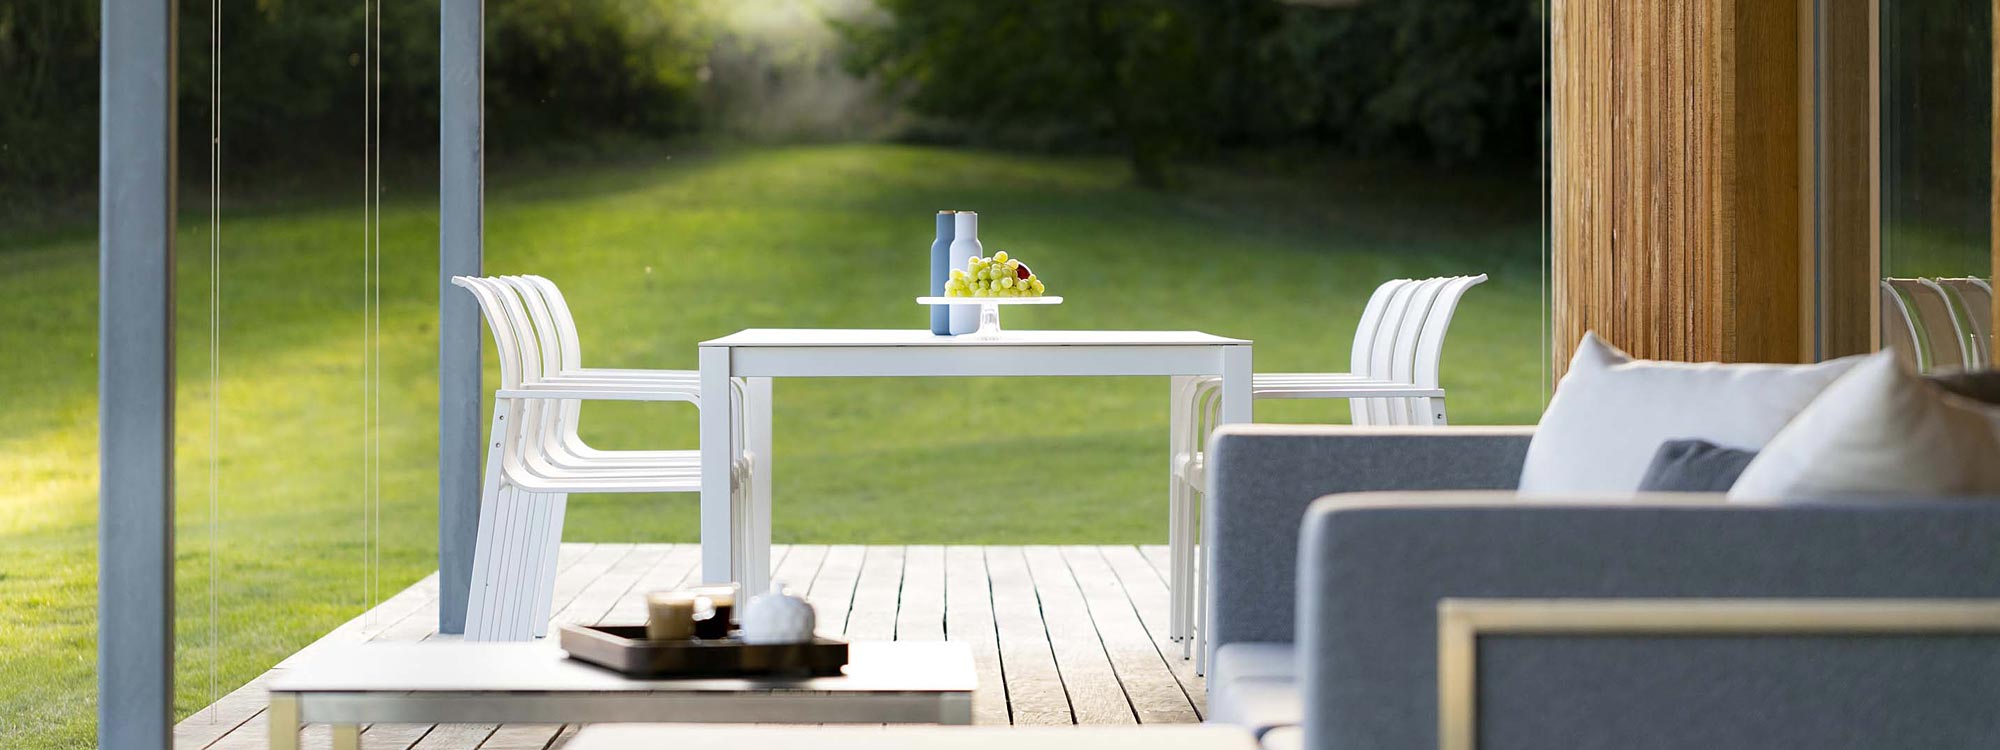 Puro modern garden dining set & Lotos outdoor sofa on decking